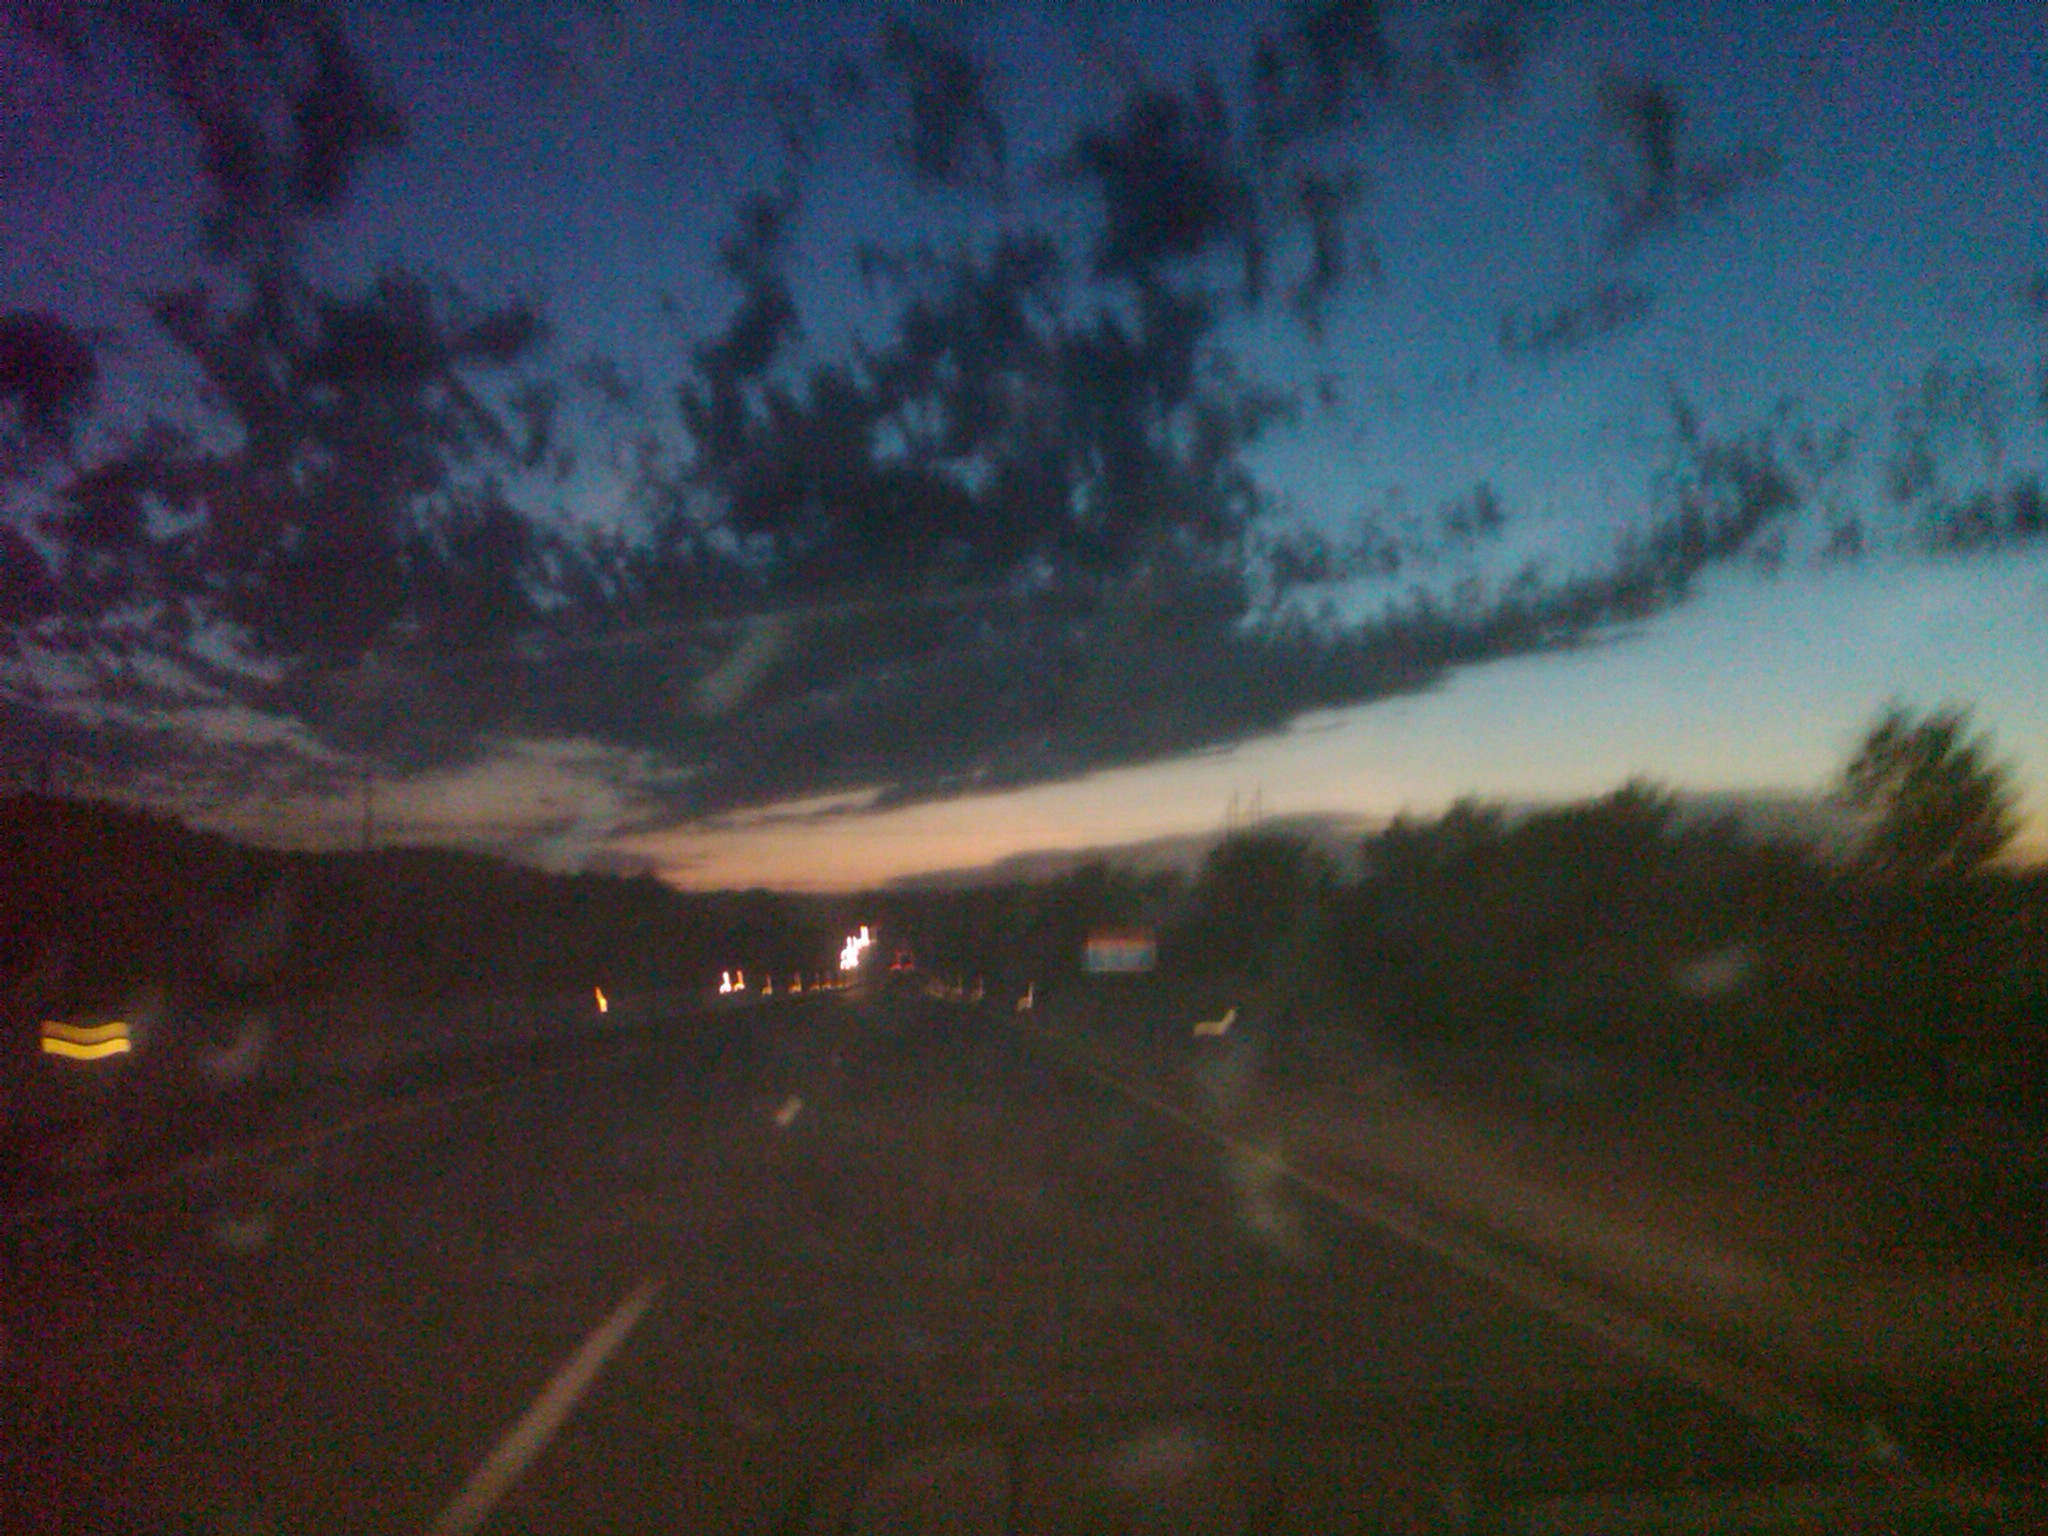 a blurry night scene taken through a windshield